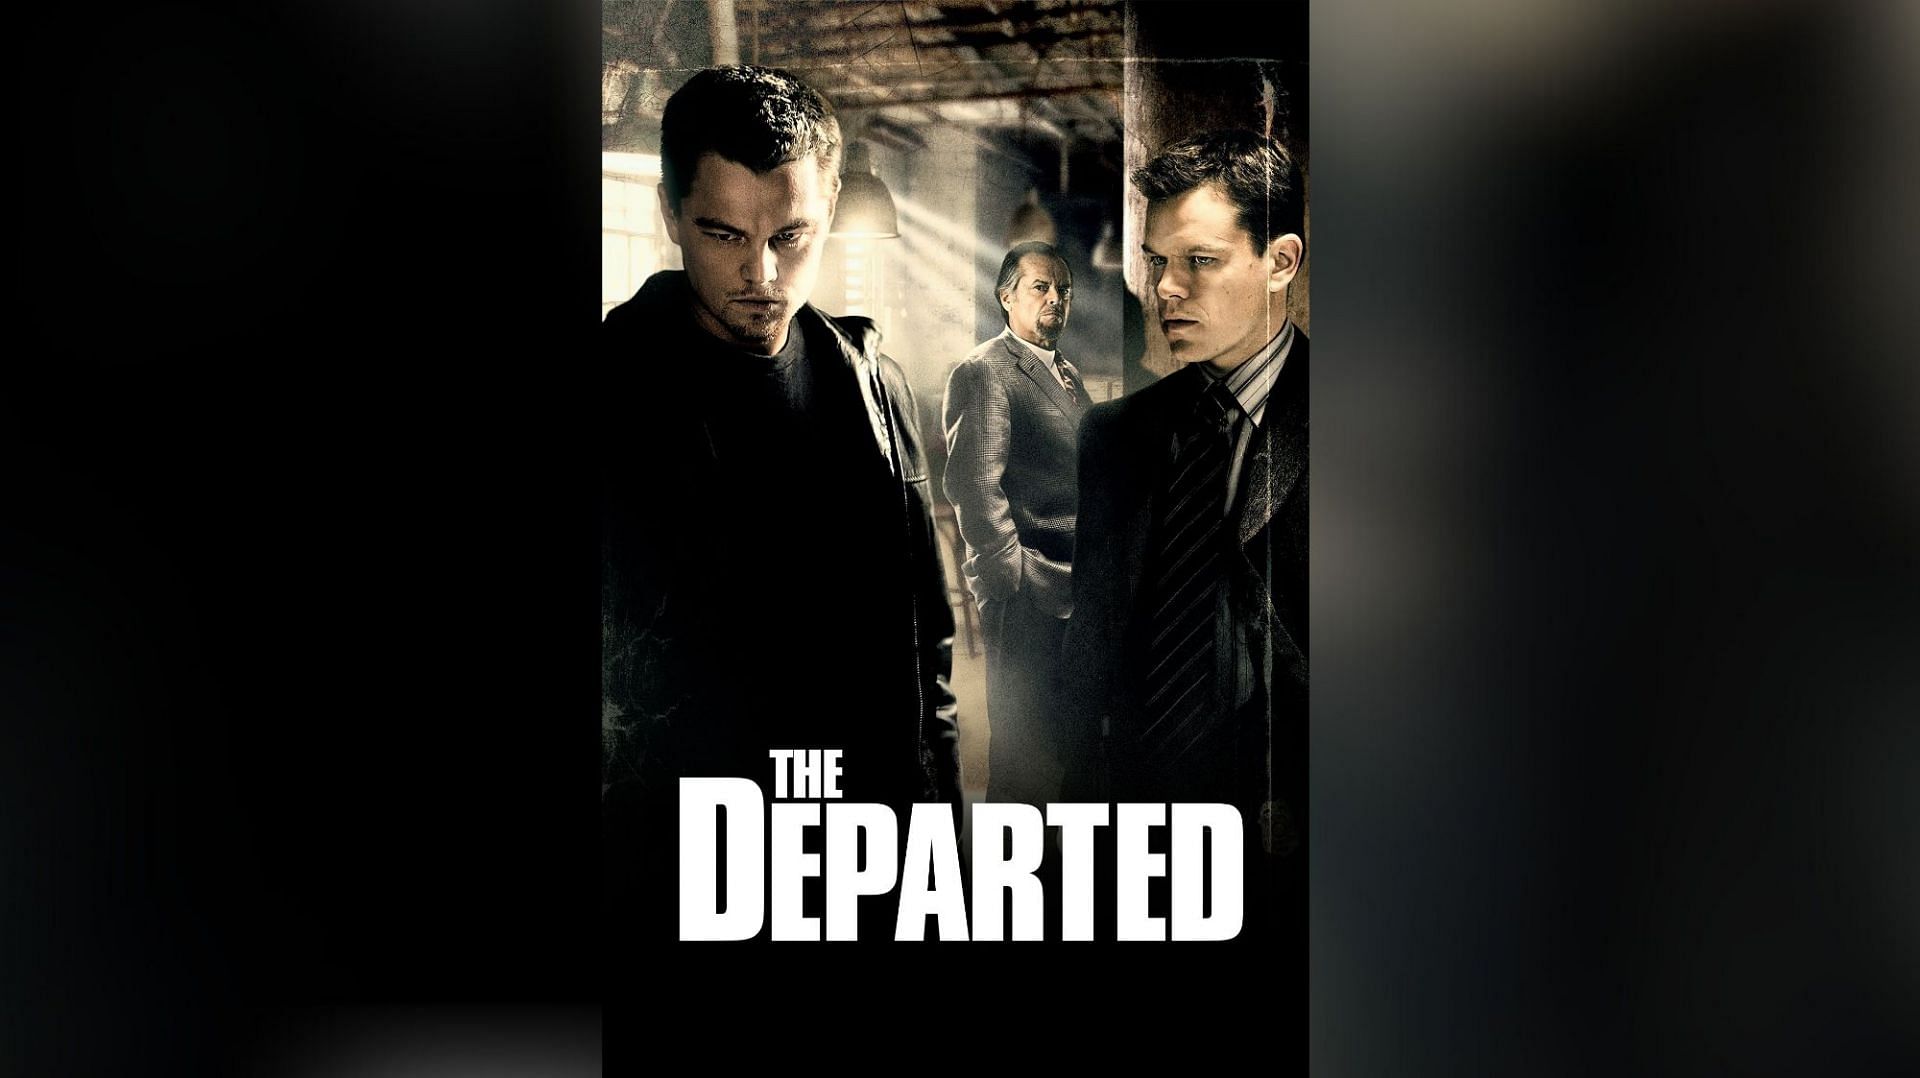 The Departed (Image via Warner Bros)